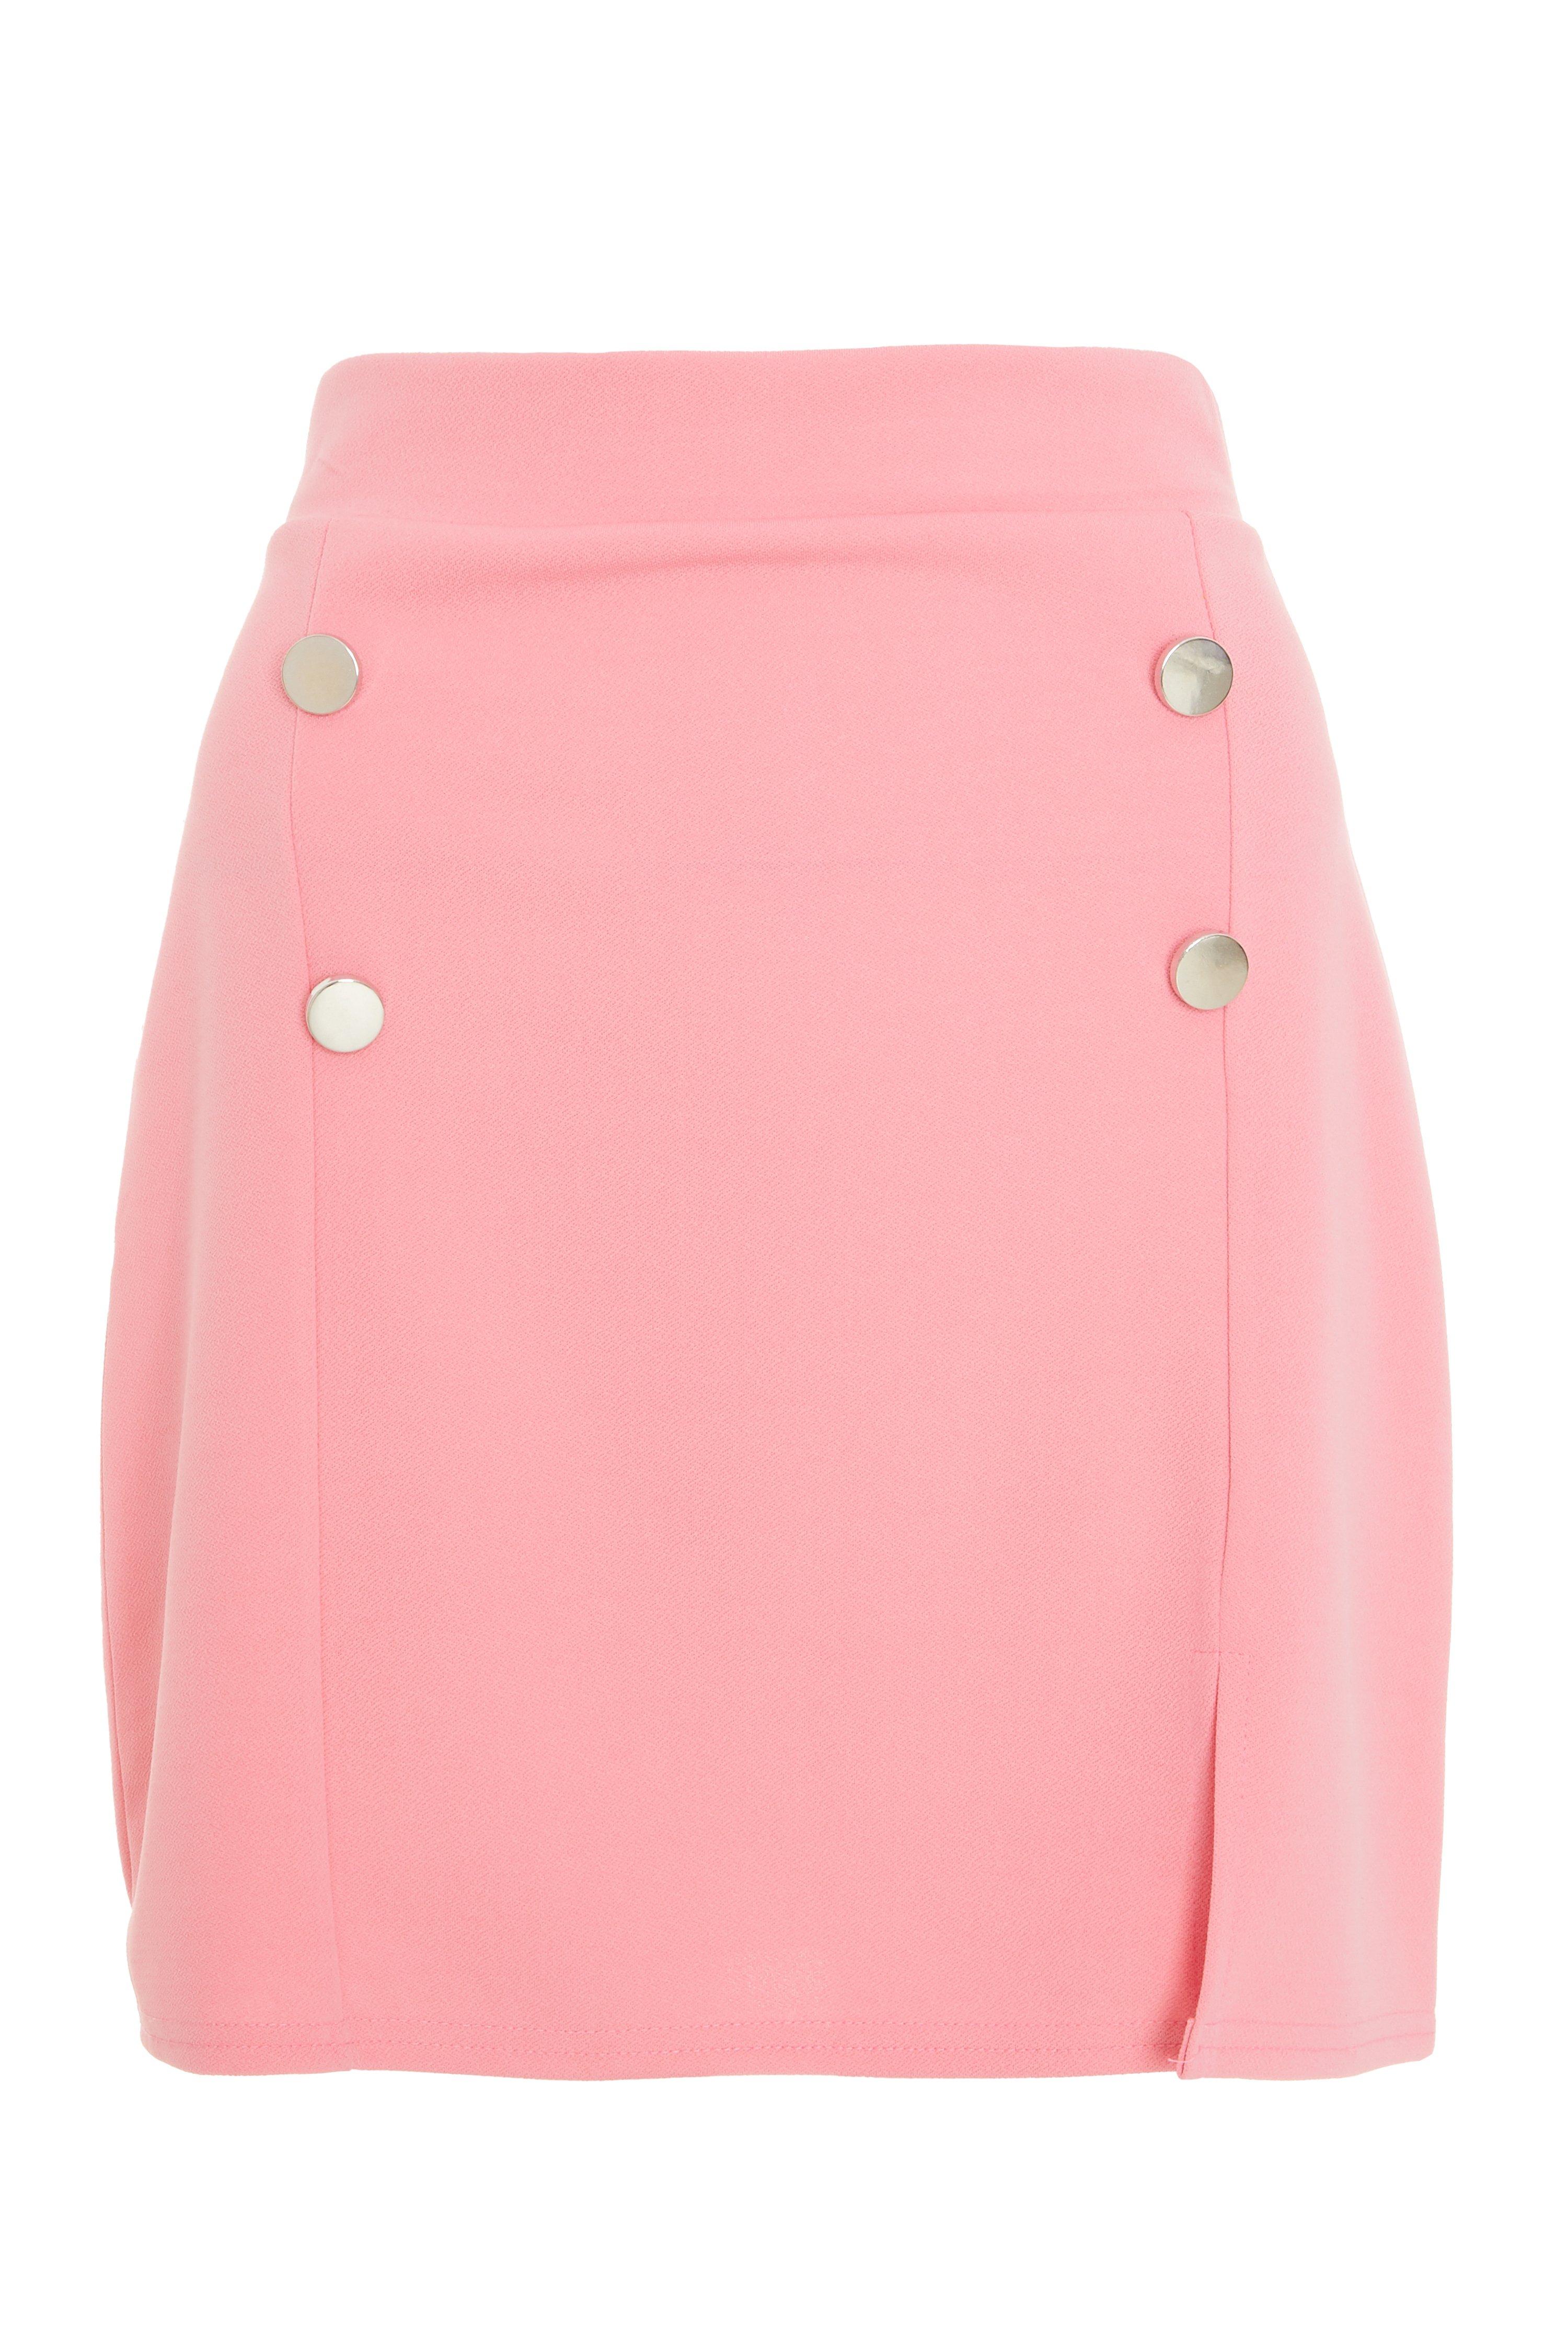 Pink High Waist Mini Skirt - Quiz Clothing